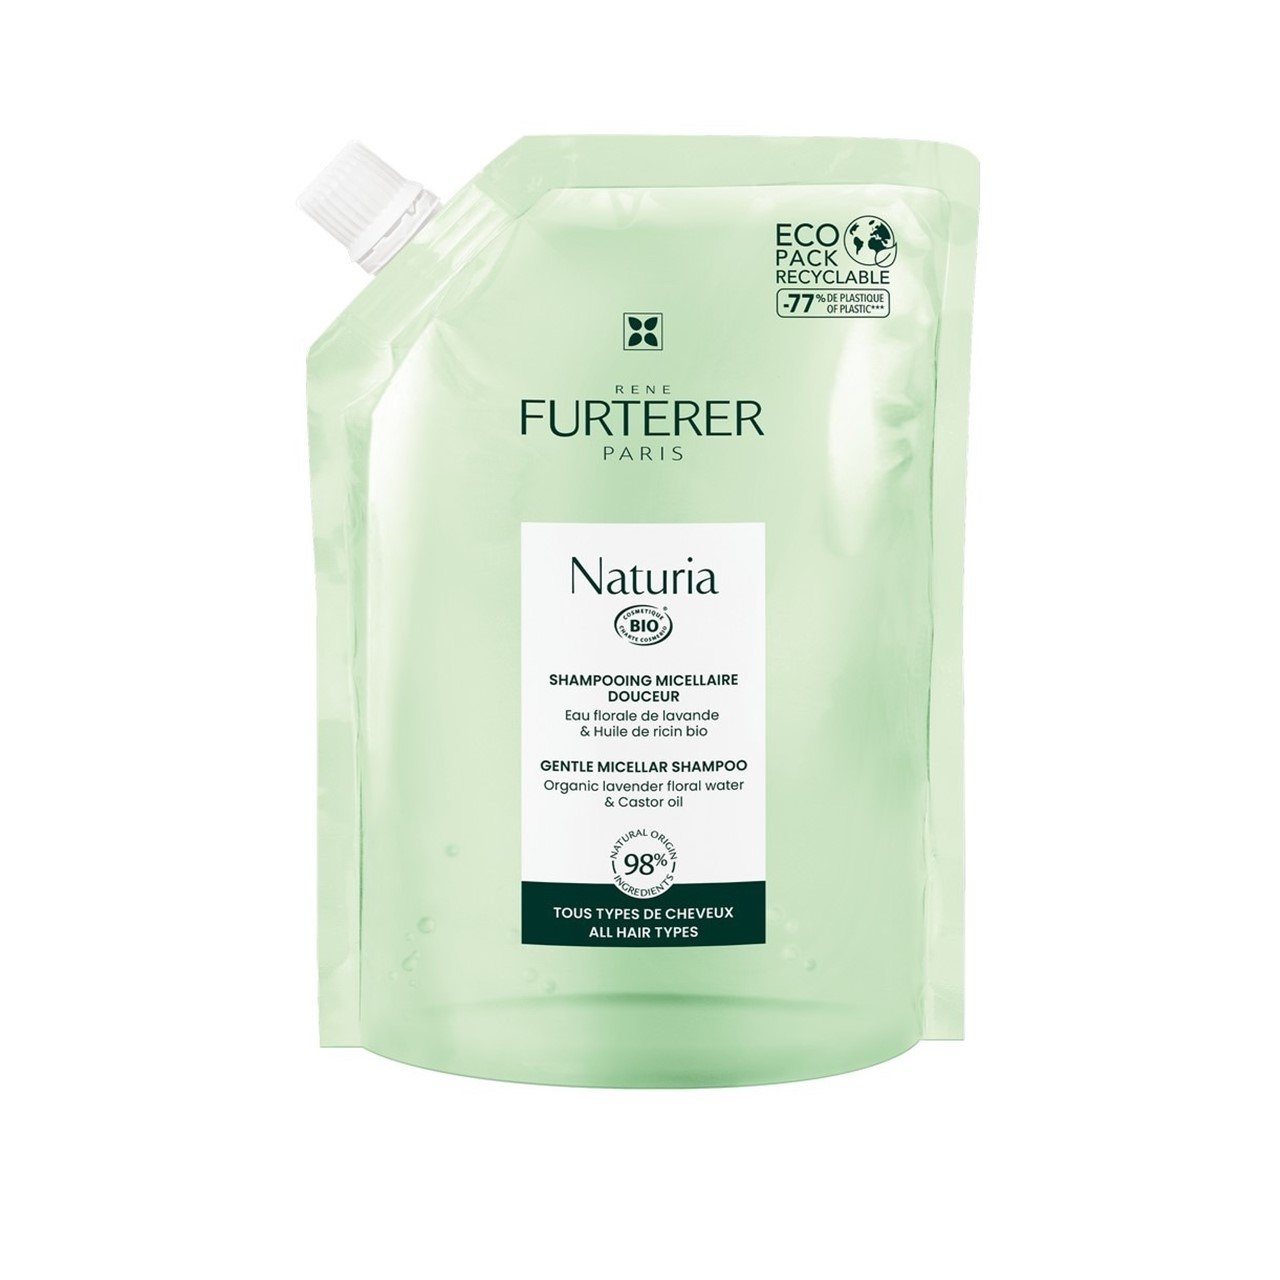 René Furterer Naturia Gentle Micellar Shampoo Refill 400ml (13.5 fl oz)